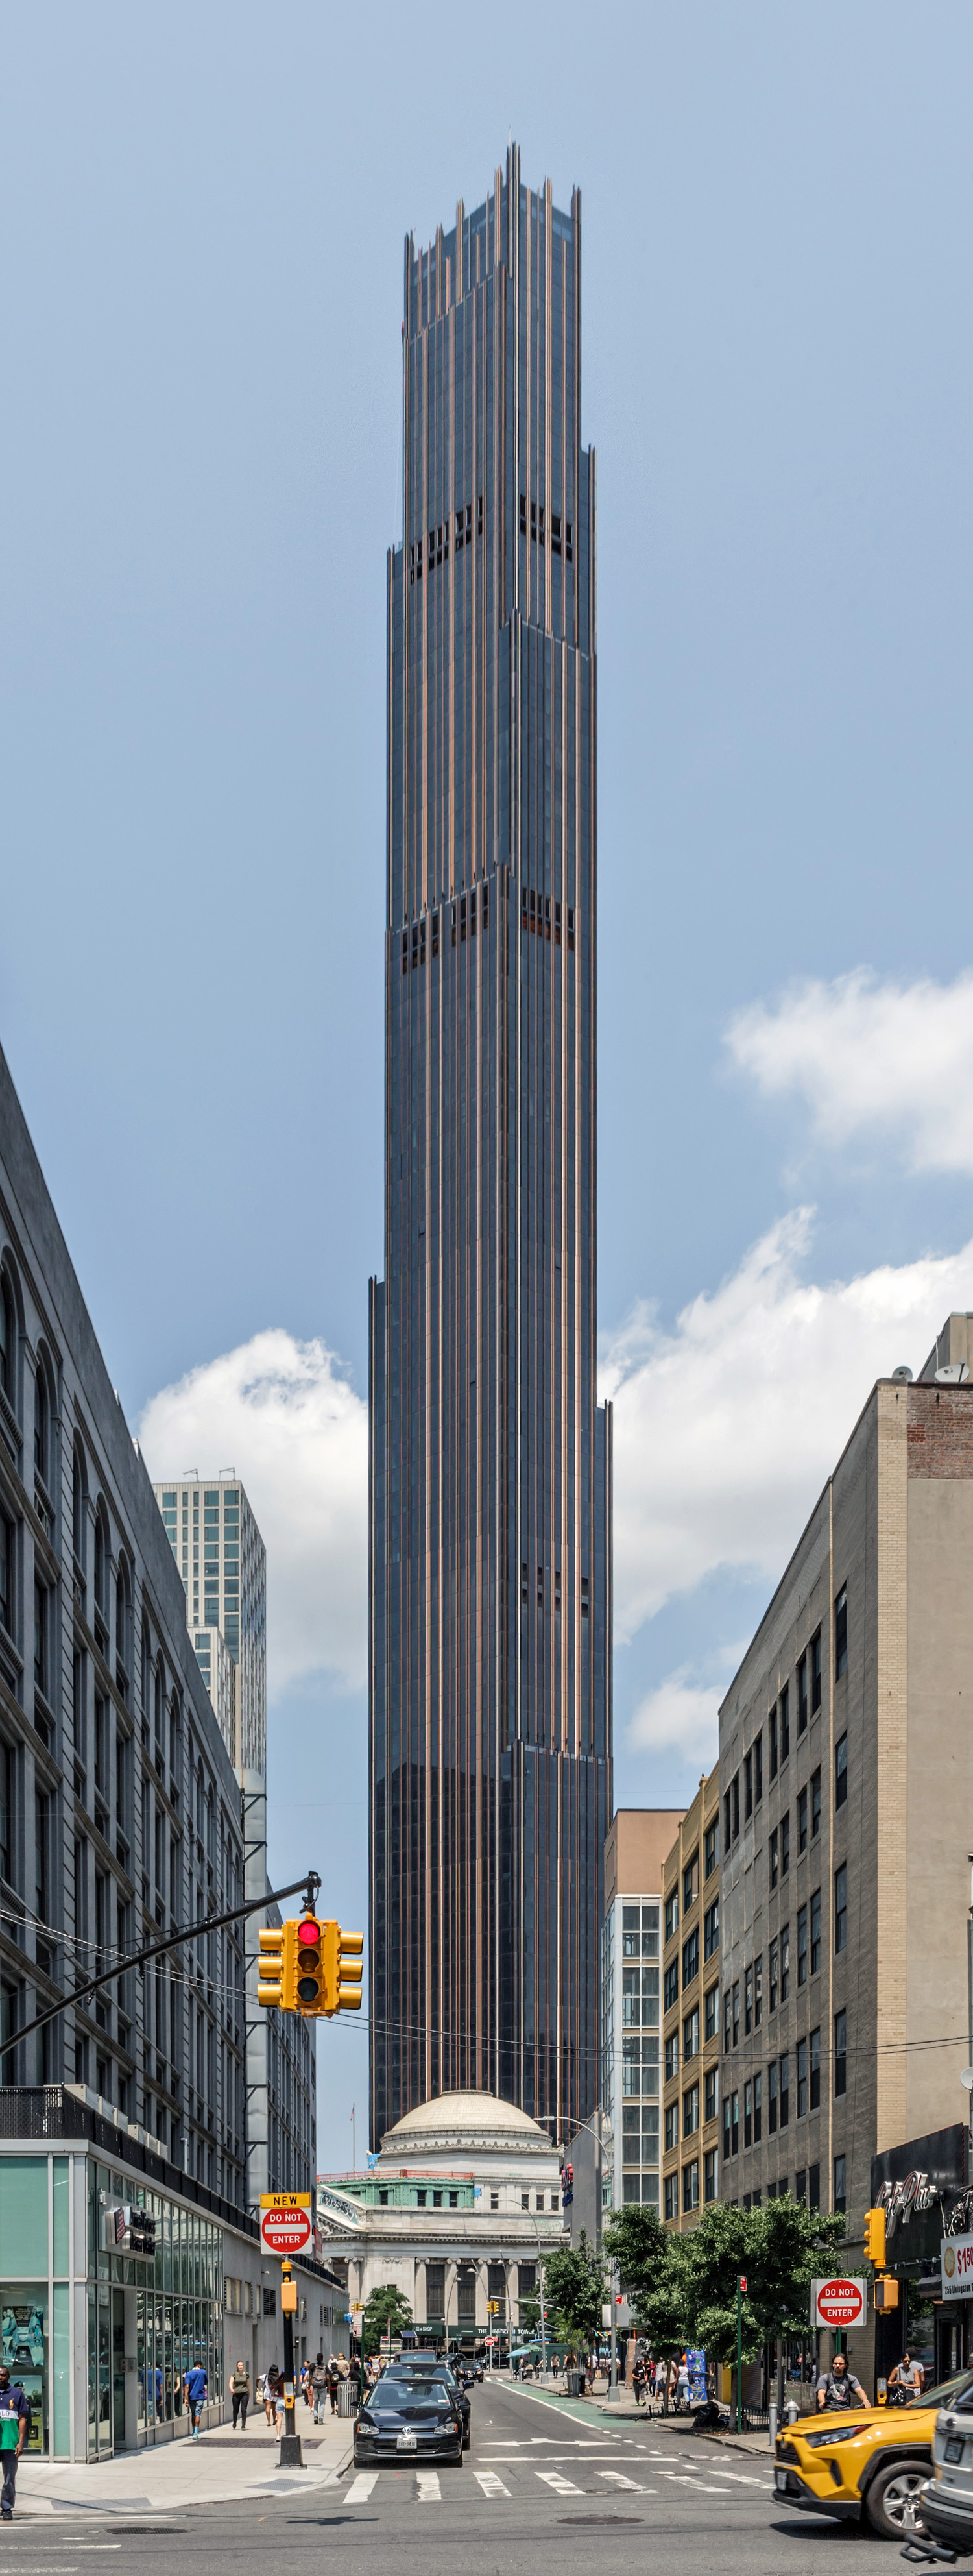 Brooklyn Tower, New York City - View from Bond Street. © Mathias Beinling